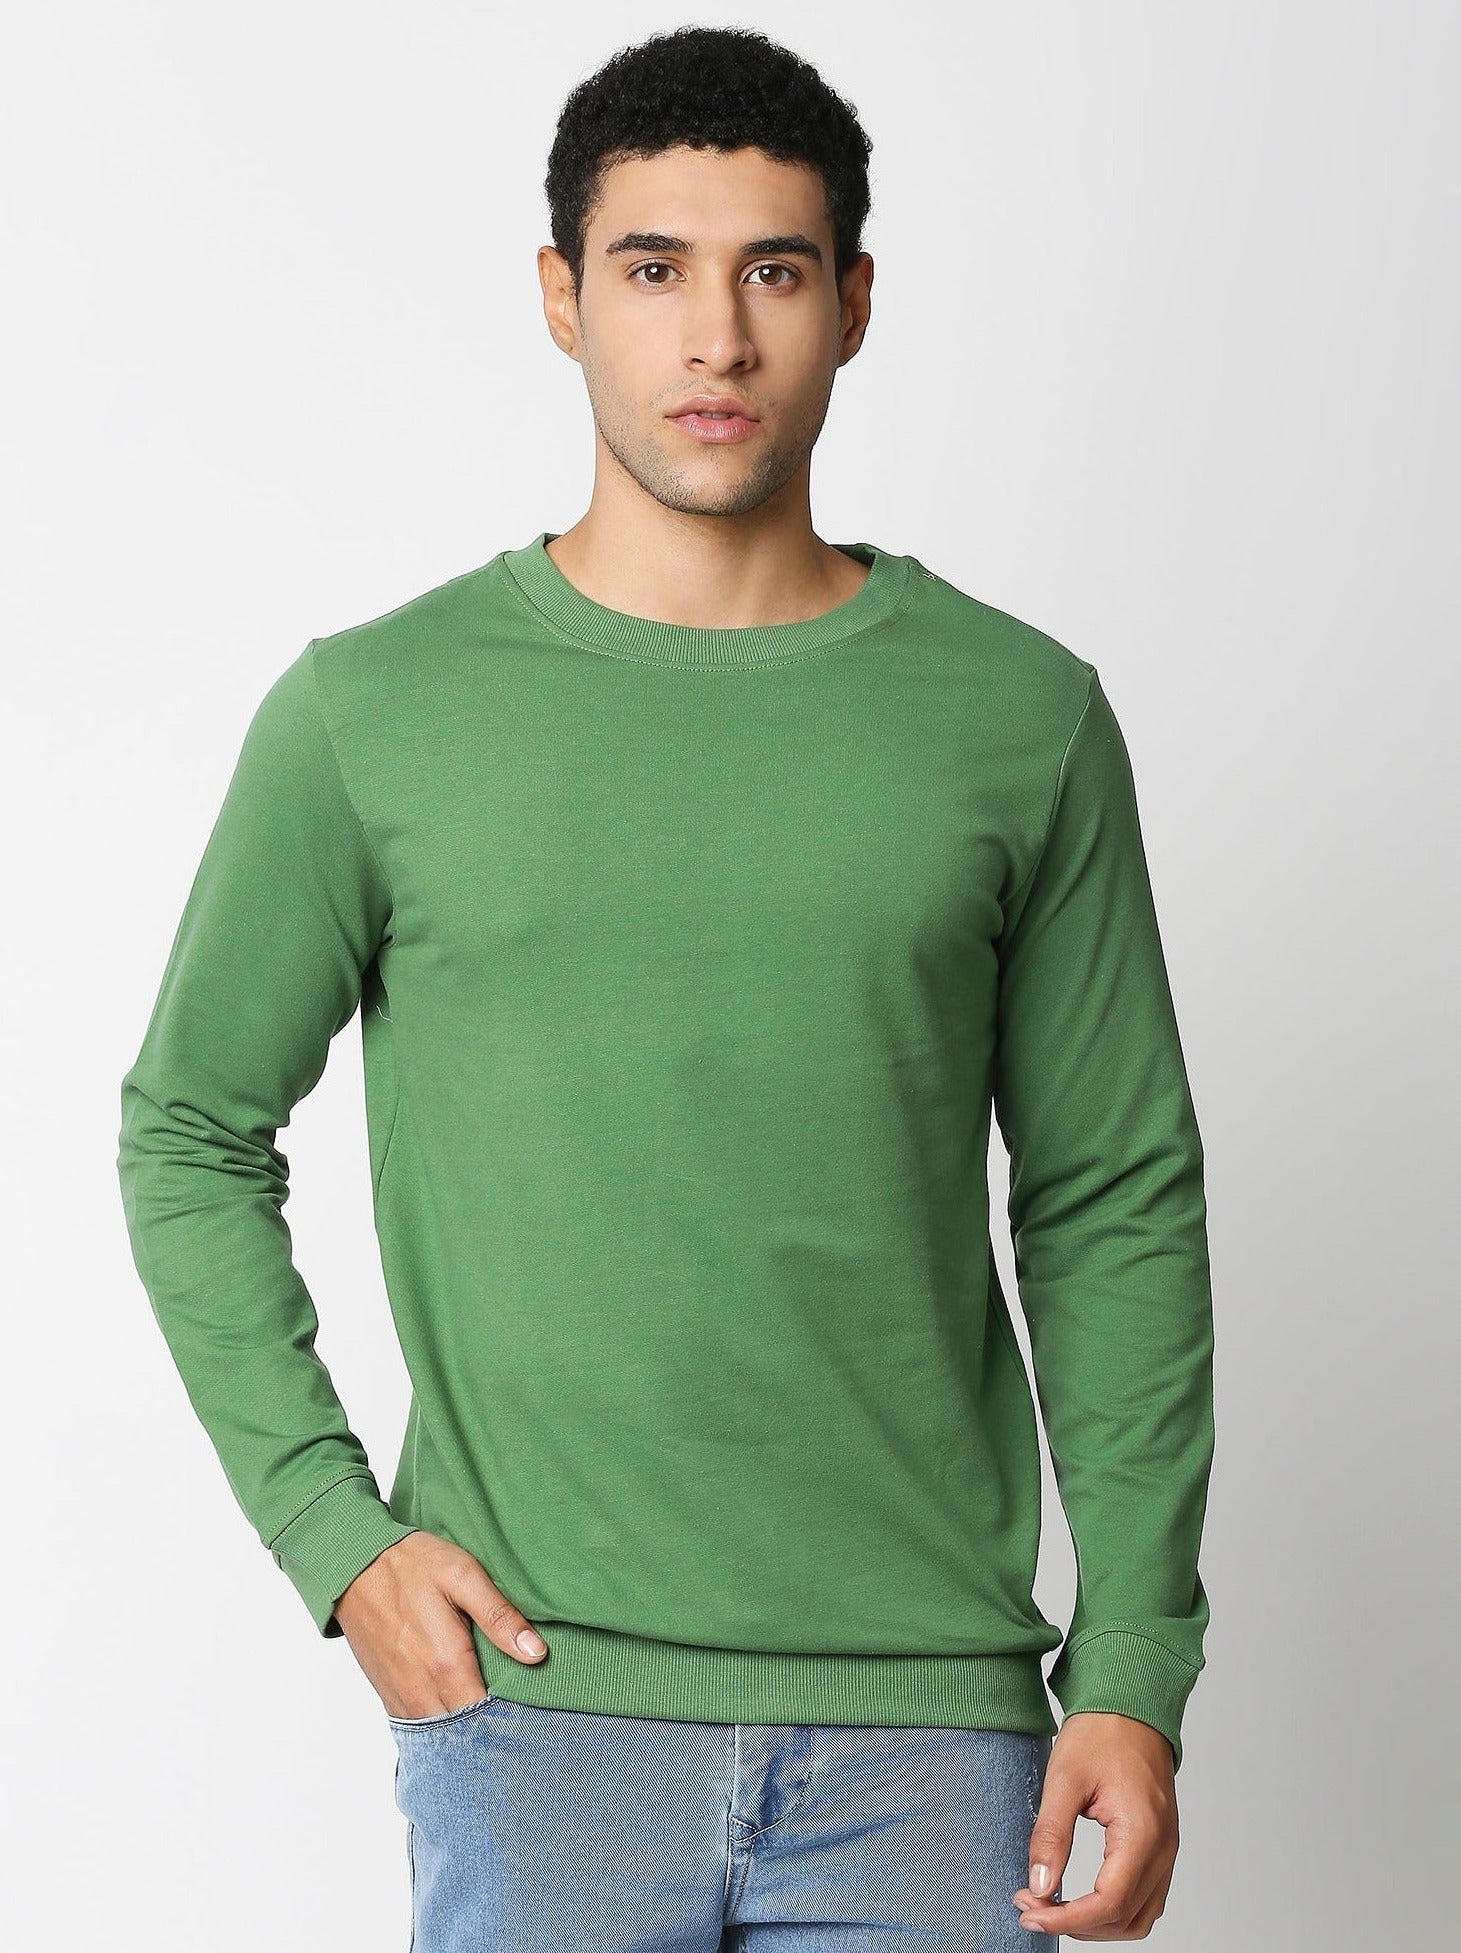 Fostino Vintage Green Plain Full Sleeves T-Shirt - Fostino